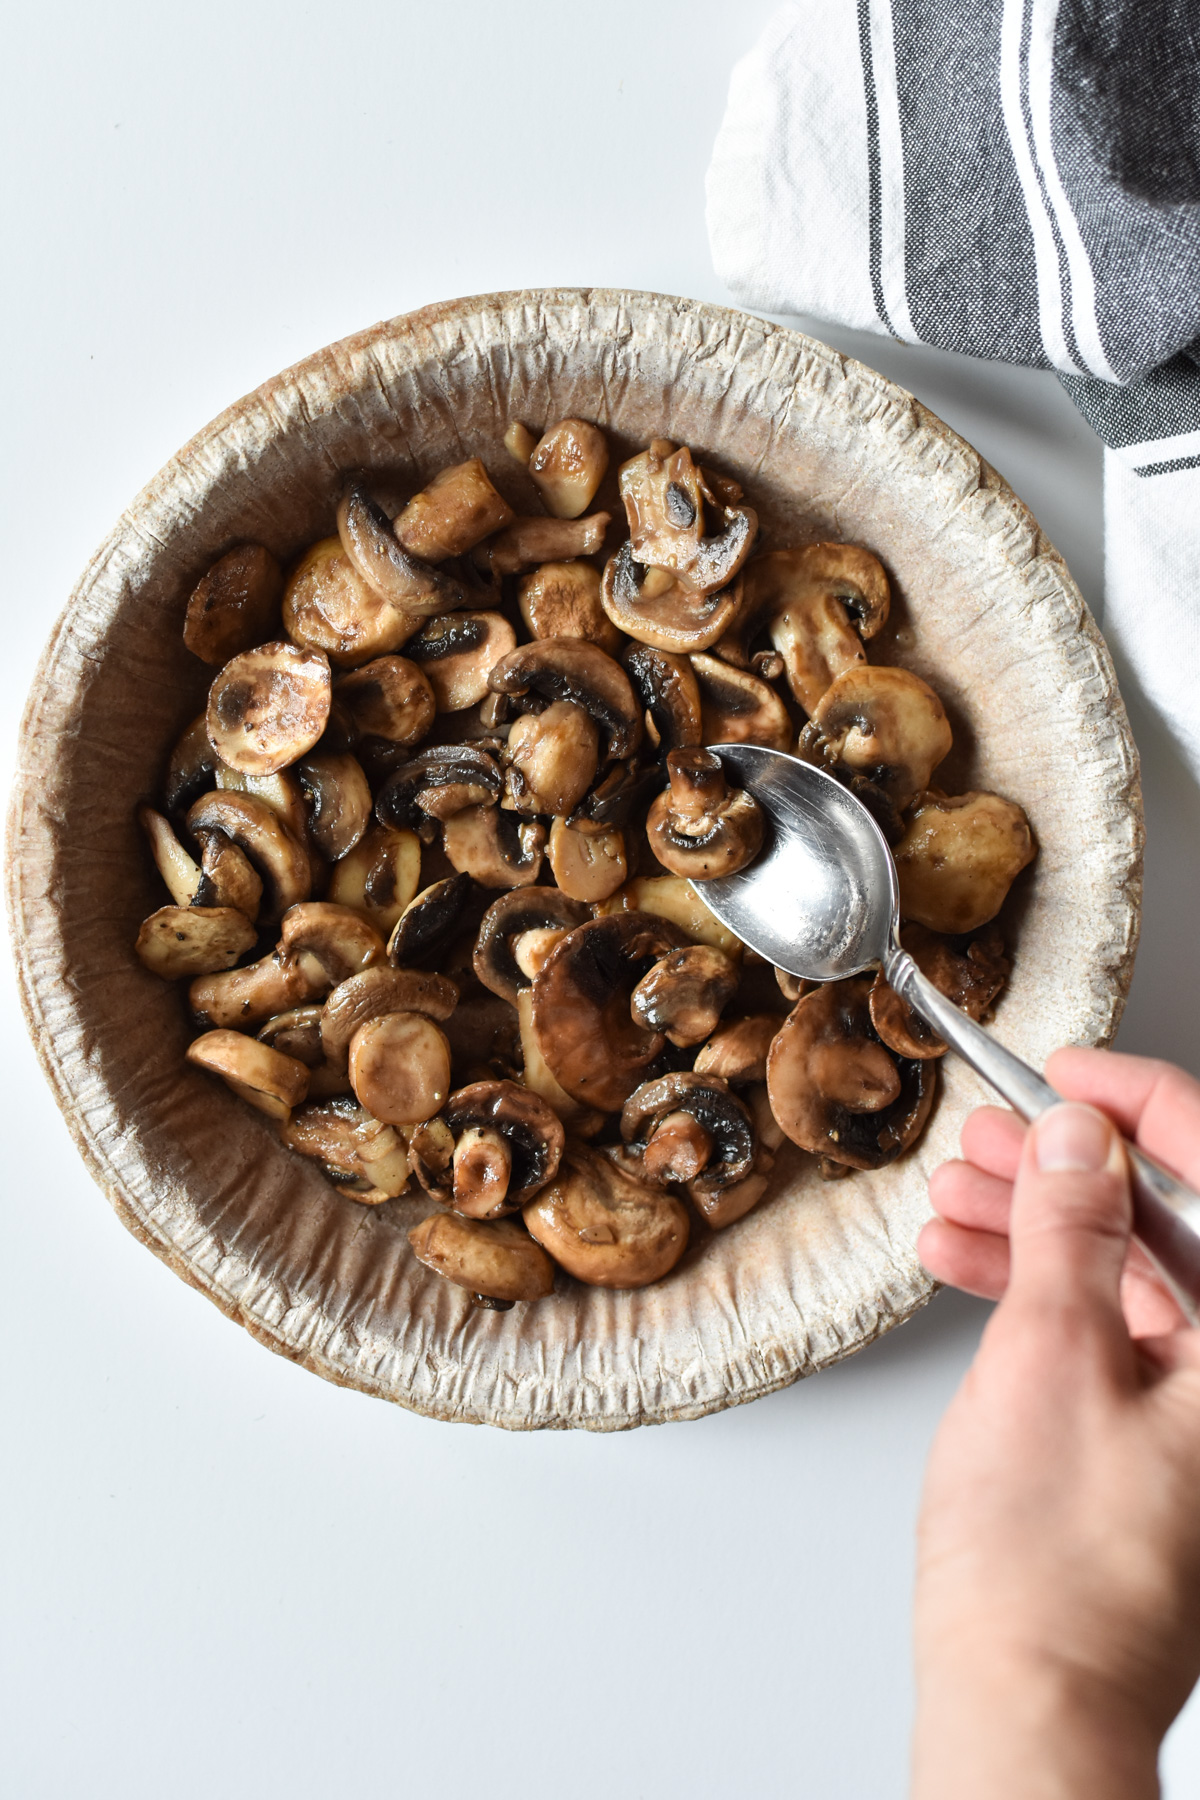 spooning mushrooms into a pie crust